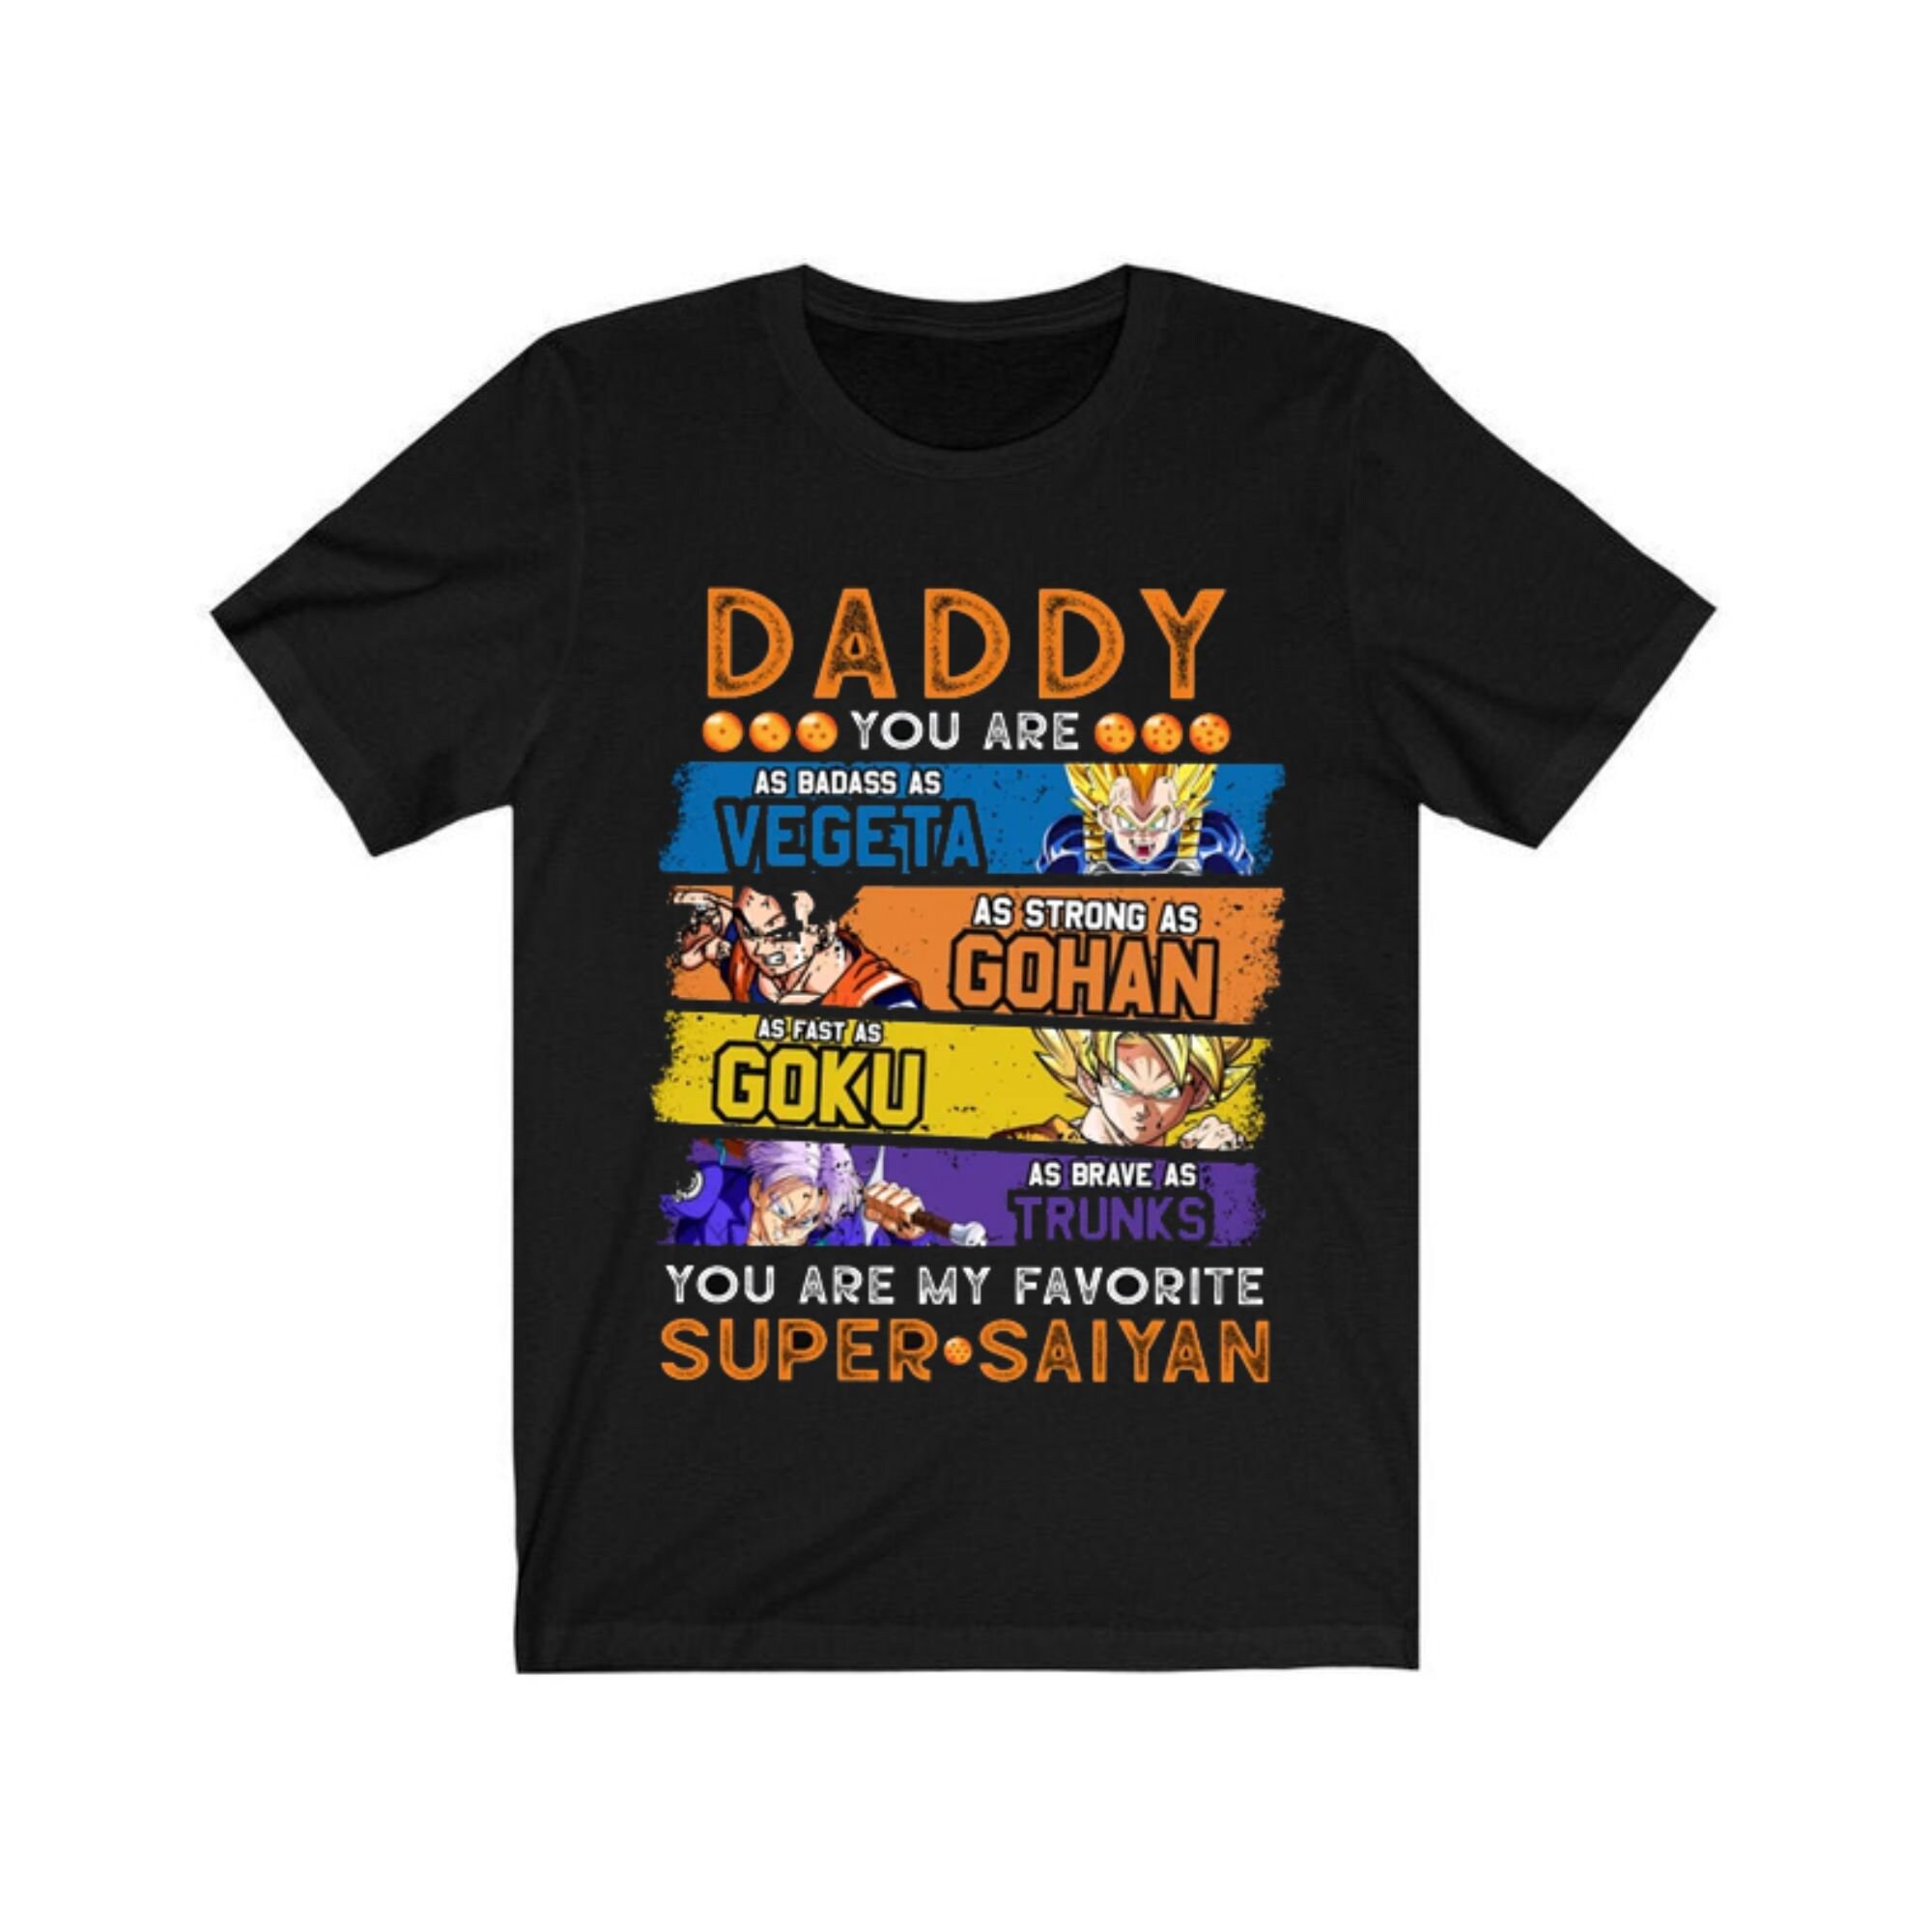 Discover Daddy You Are My Favorite Super Saiyan Unisex T-shirt, Vegeta Gohan Goku Trunks